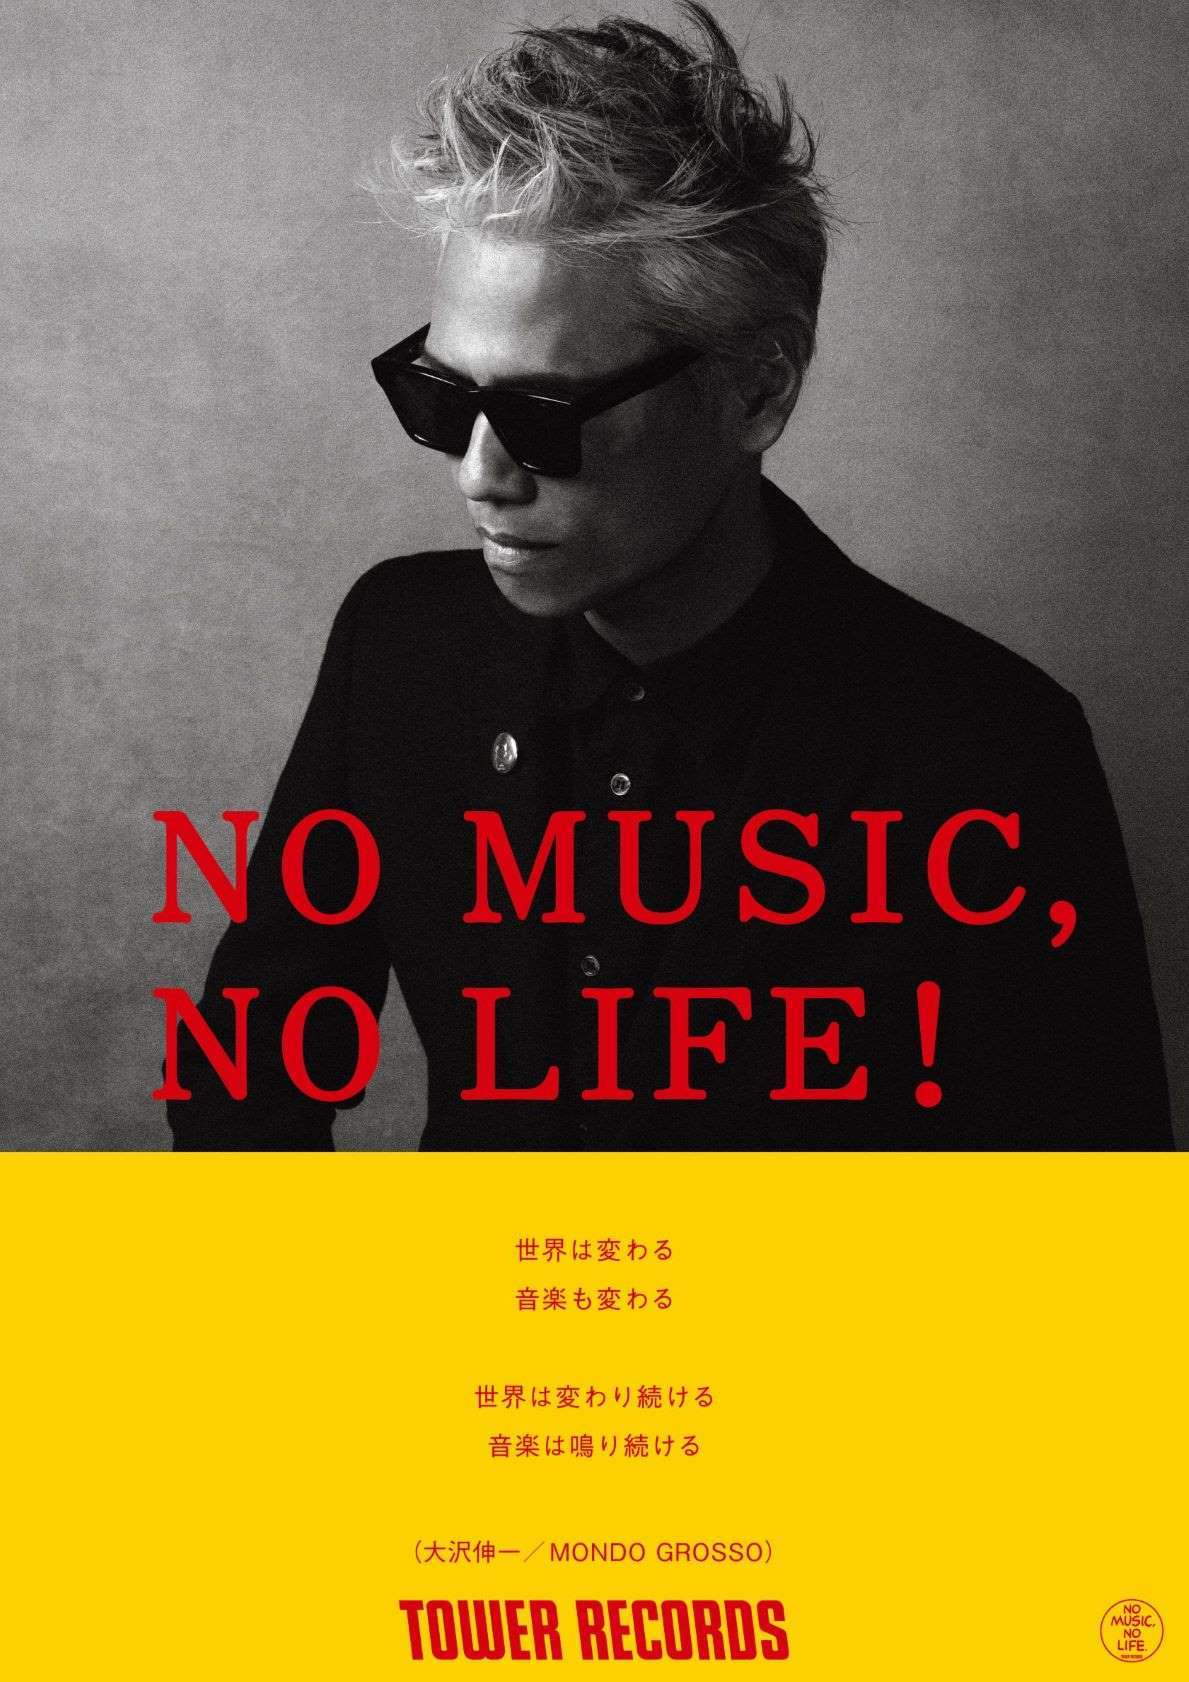 MONDO GROSSO／大沢伸一 タワーレコード「NO MUSIC, NO LIFE.」ポスター意見広告